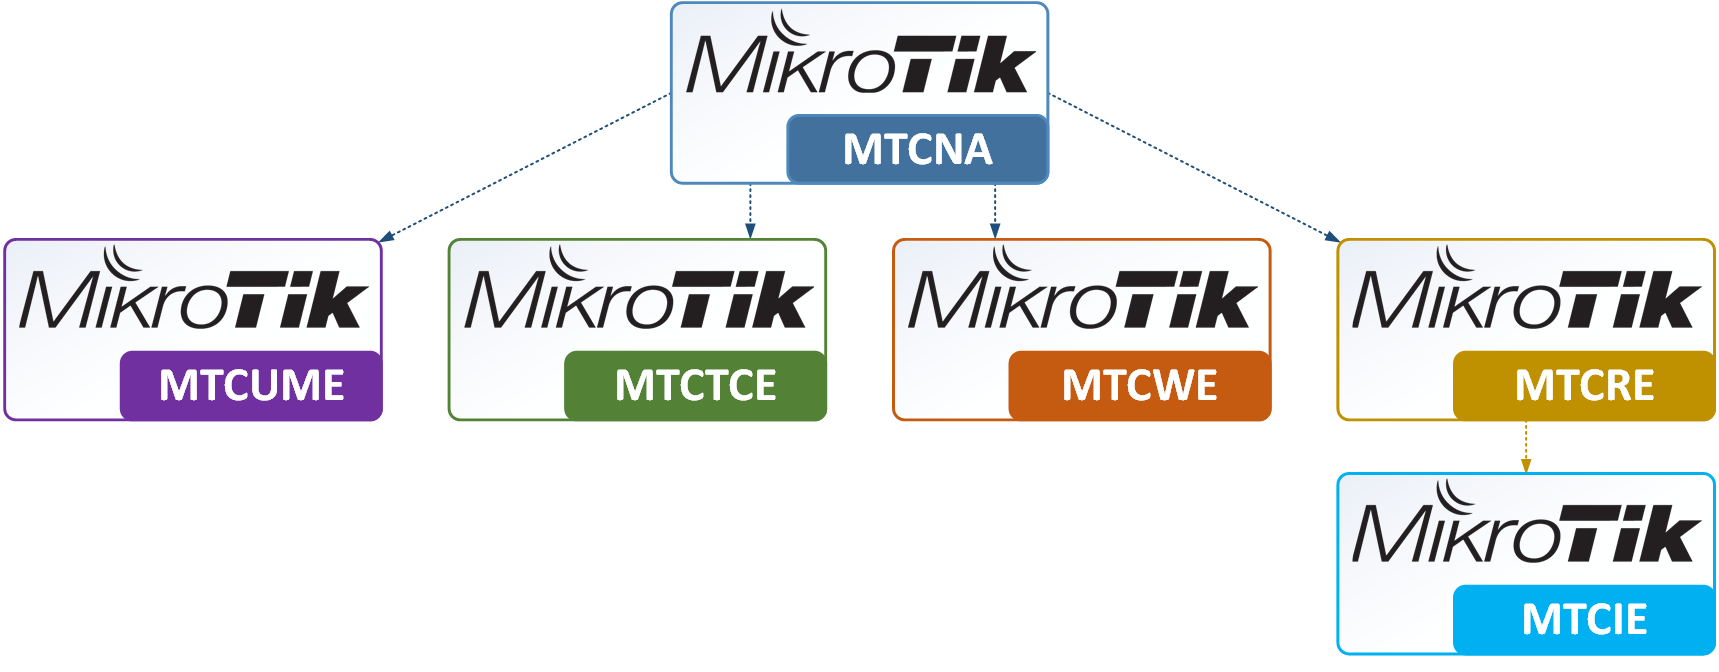 MikroTik Certification